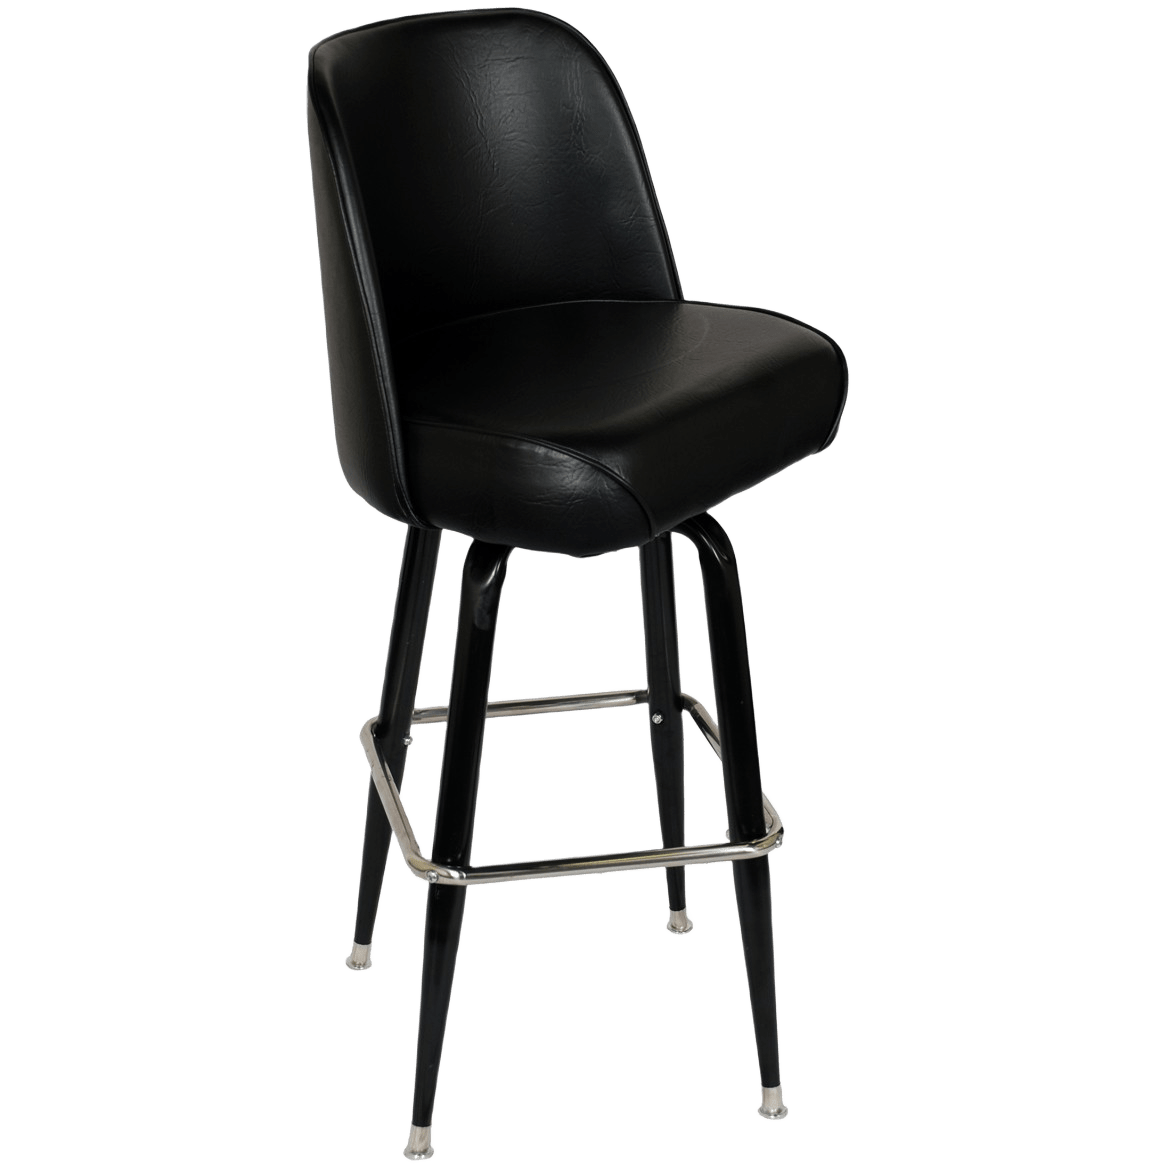 Metal Barstool with Swivel Bucket Seat 